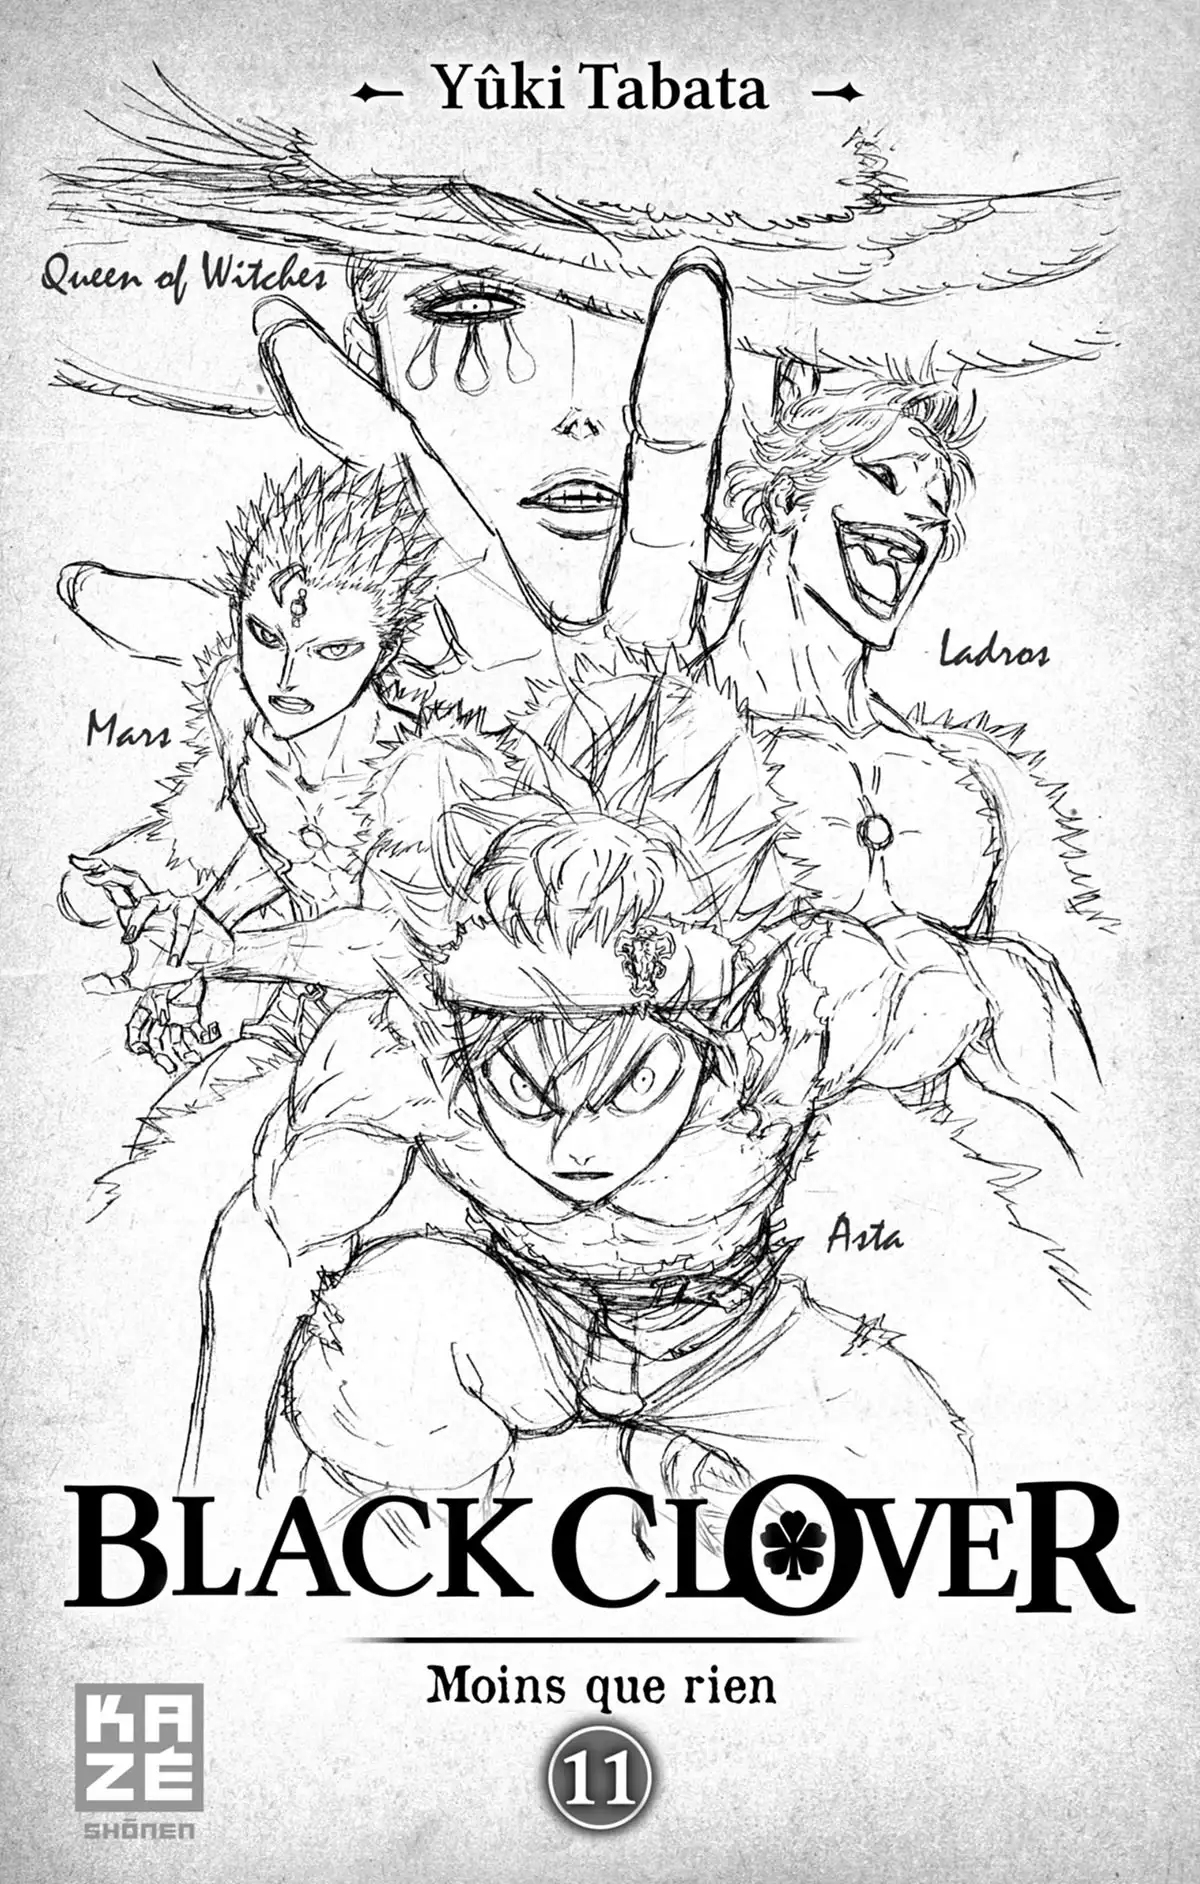 Black Clover Volume 11 page 2